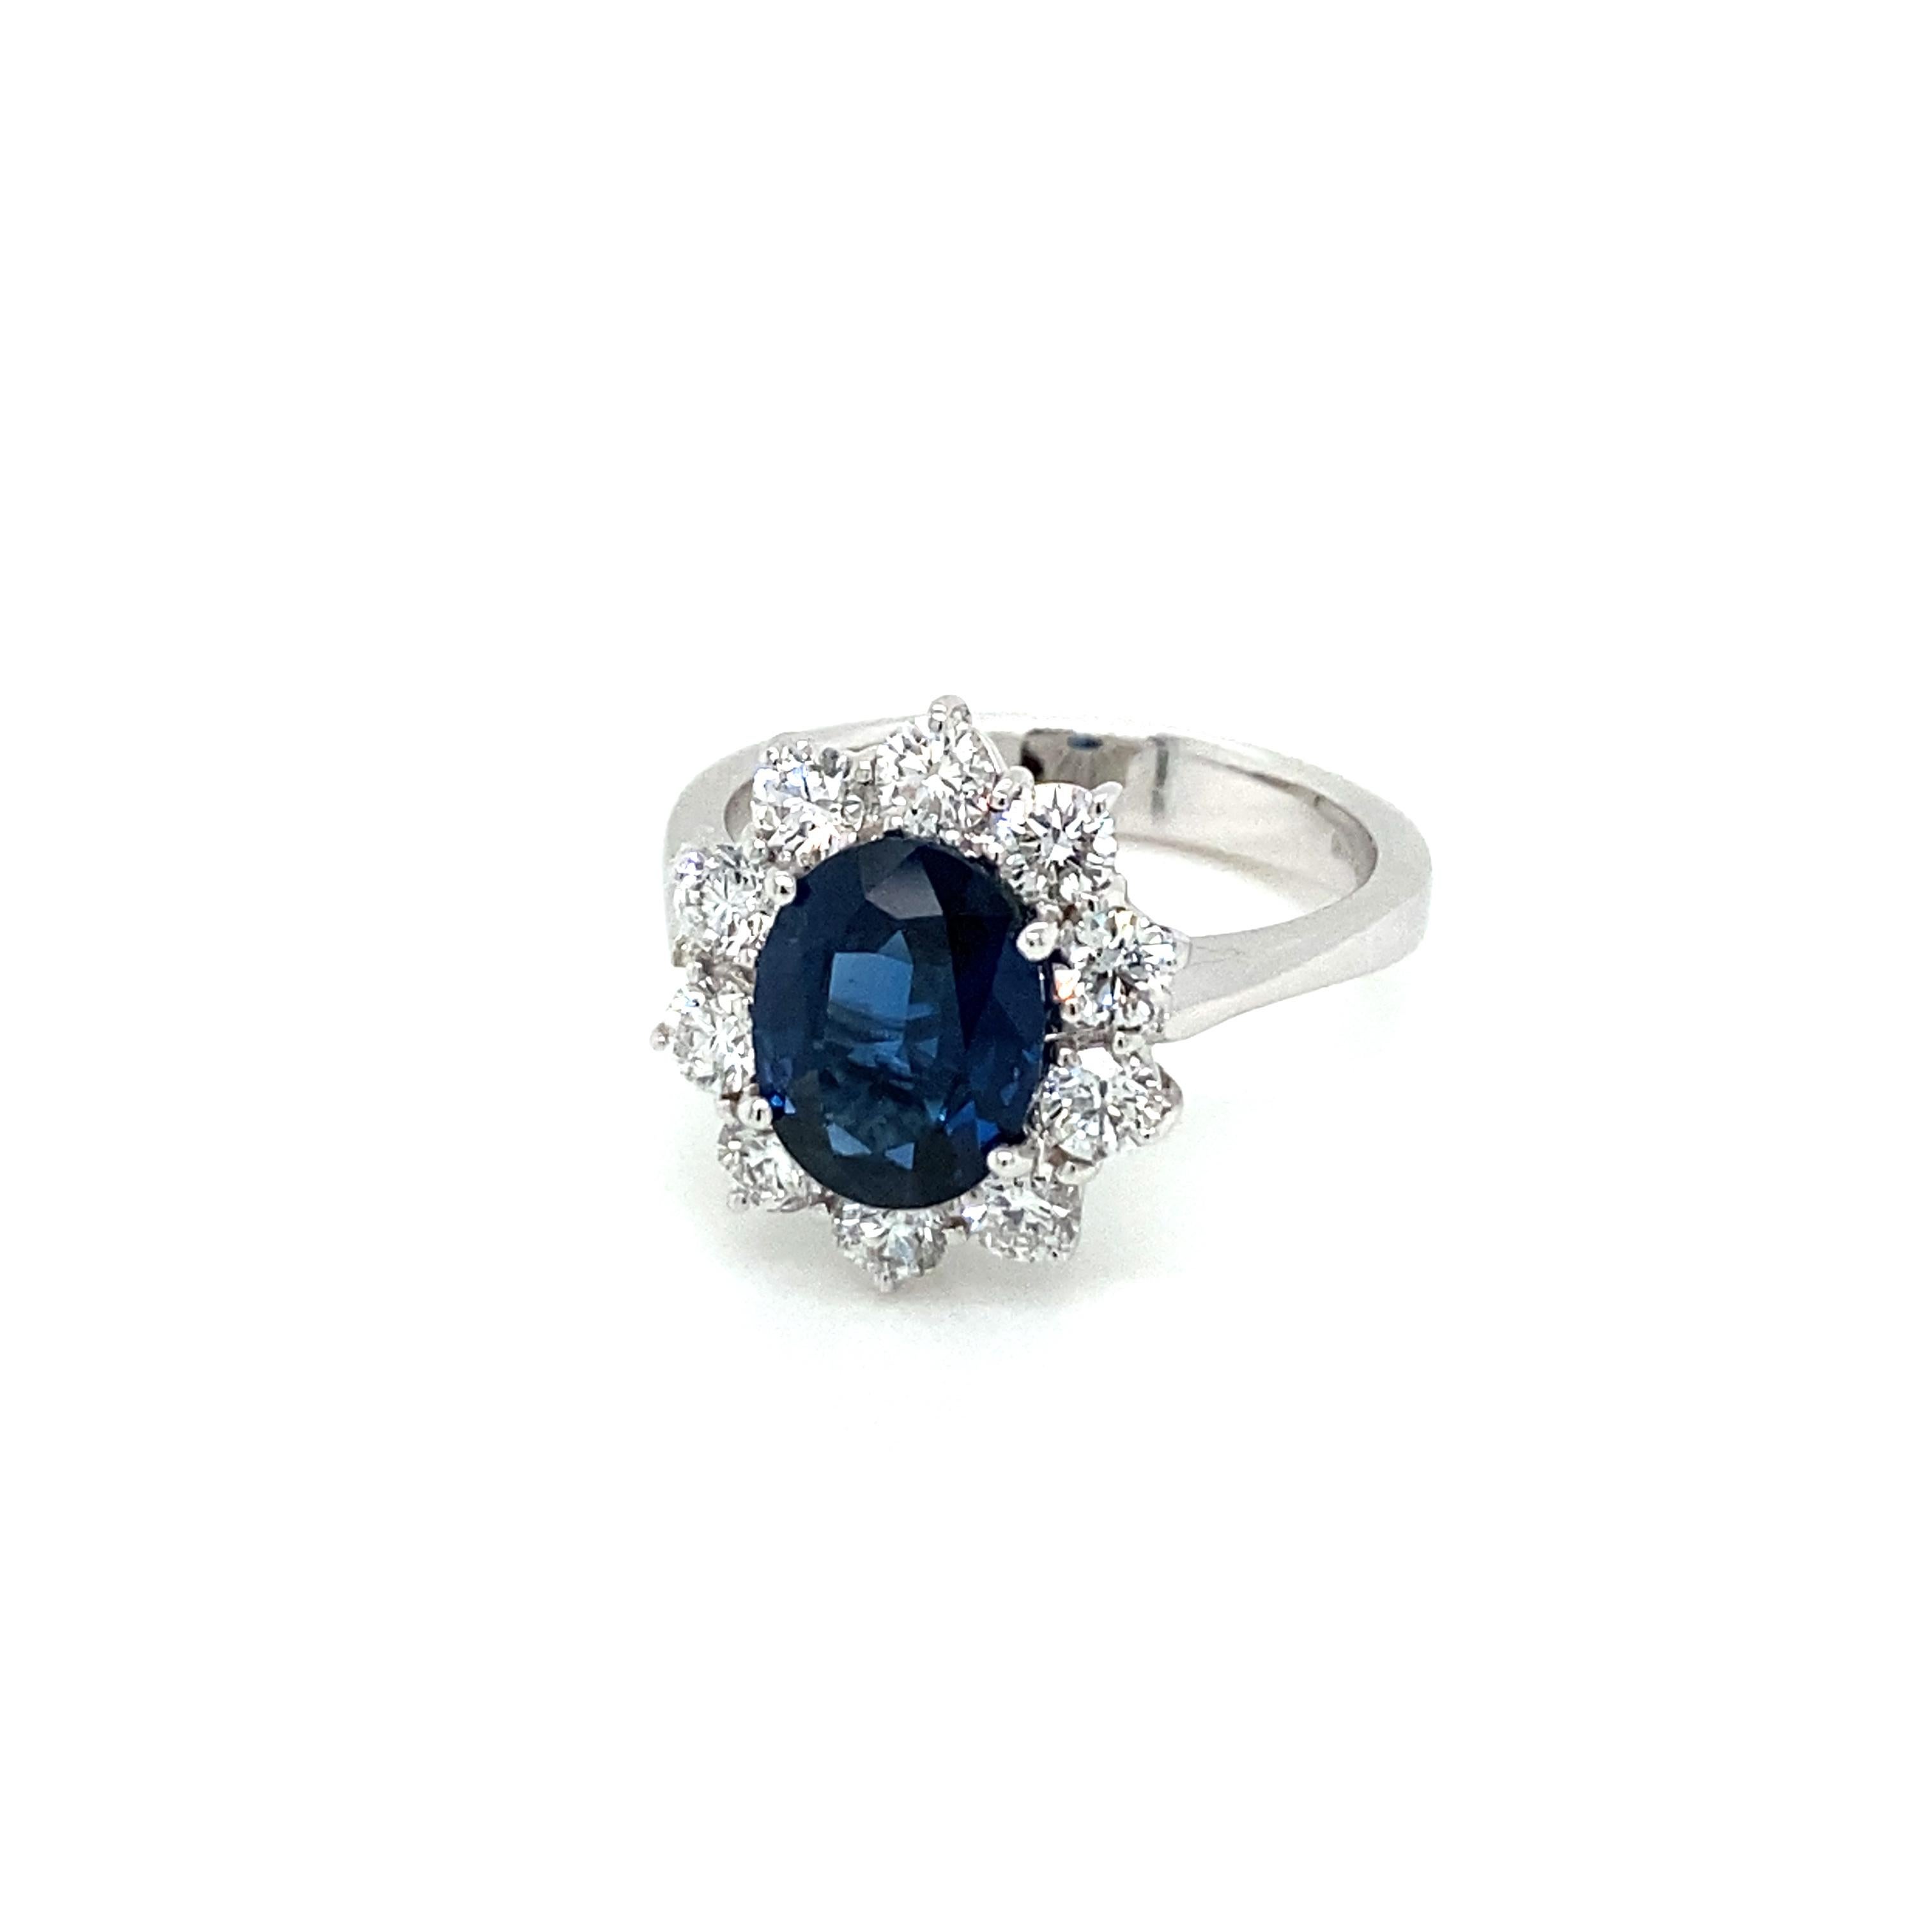 Oval Cut Certified 2.10 Carat Unheated Burma Sapphire Diamond Engagement Ring